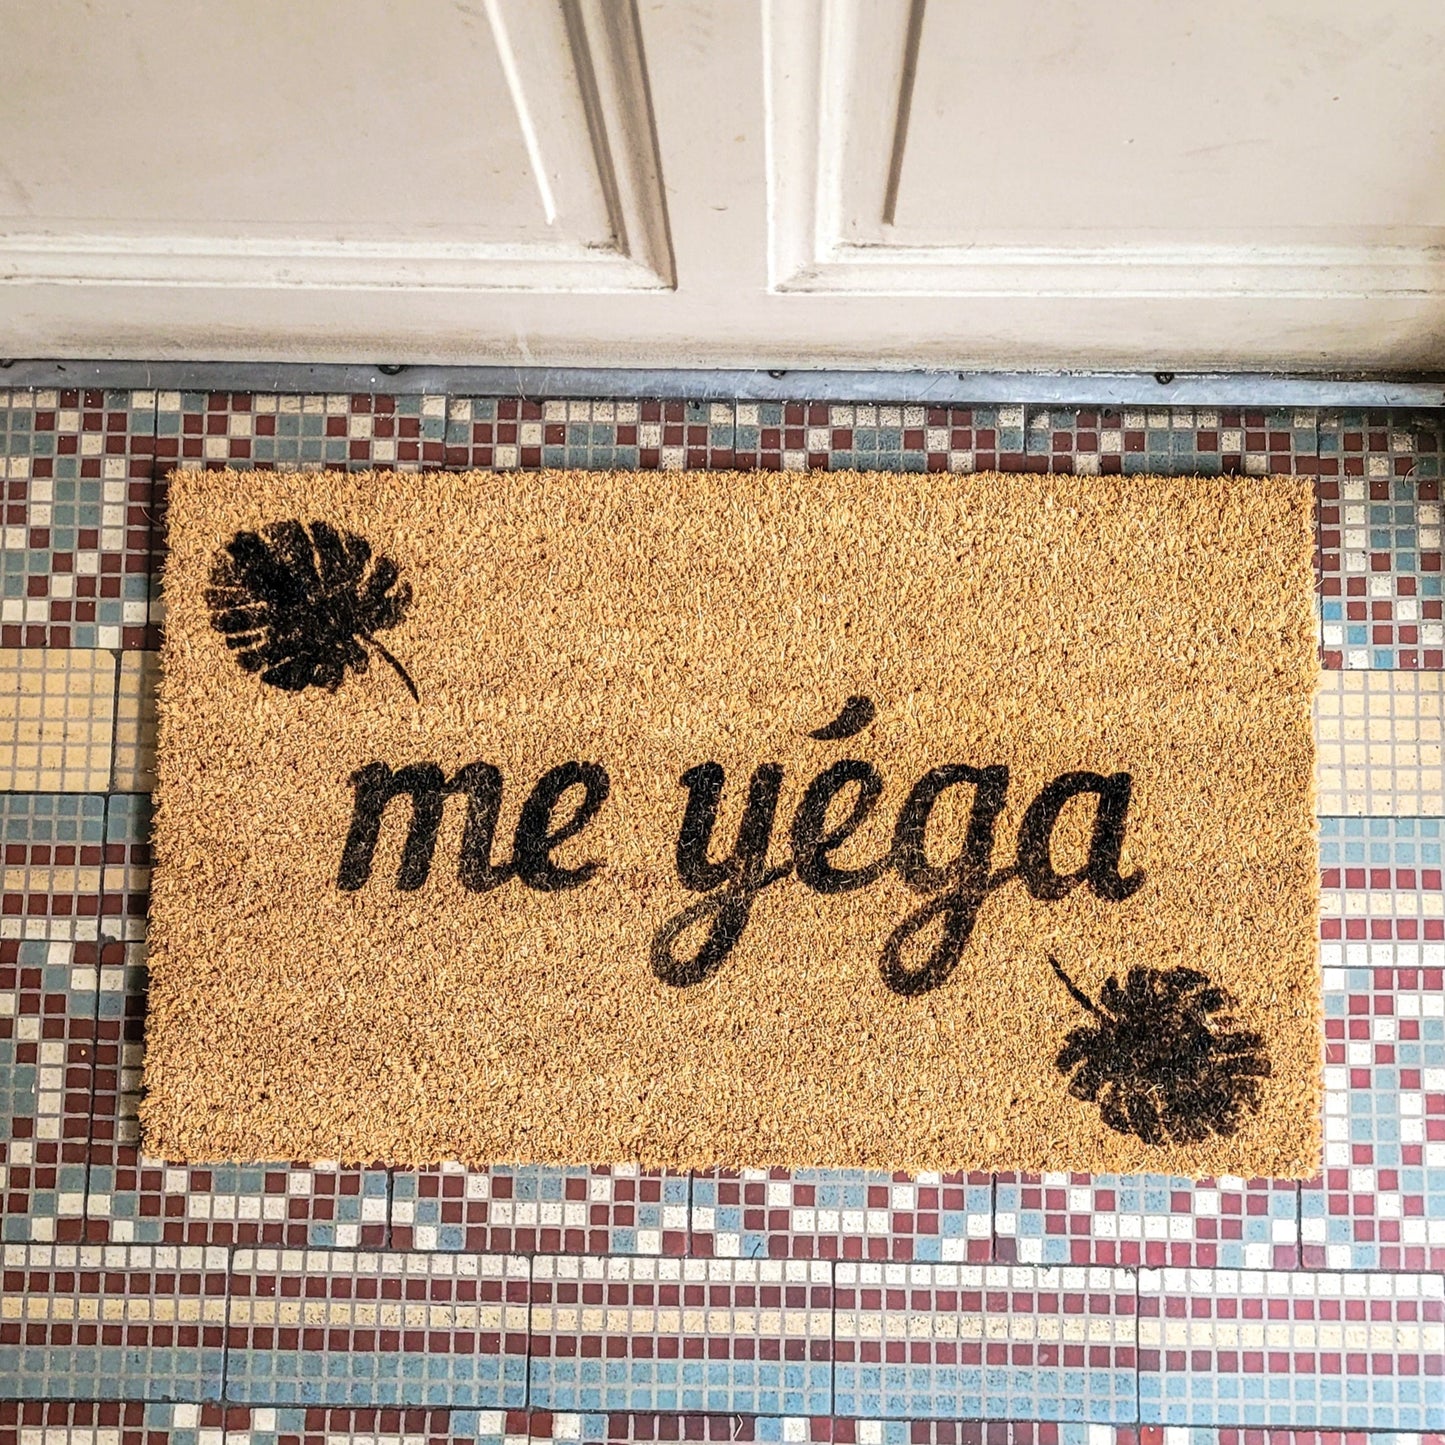 "Me yéga" door mat - Greeting in Baasa (Cameroon)